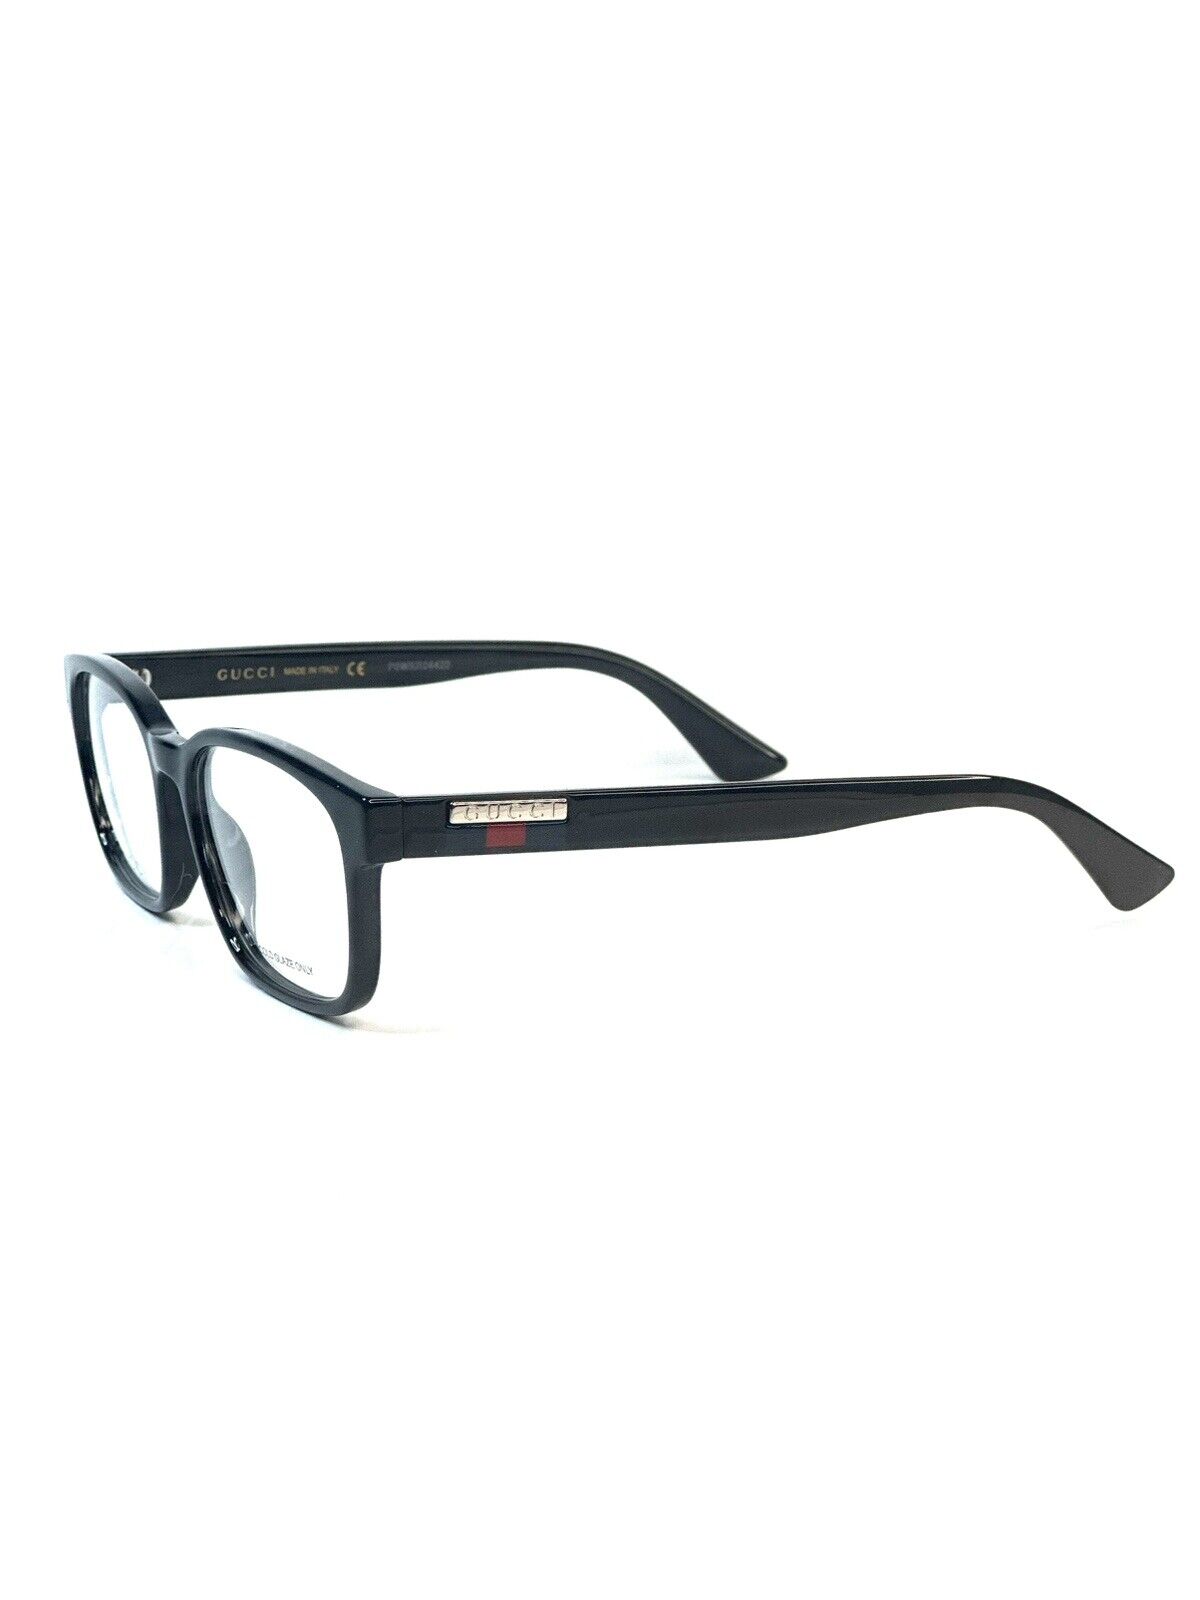 Gucci GG0749o-004 55mm New Eyeglasses